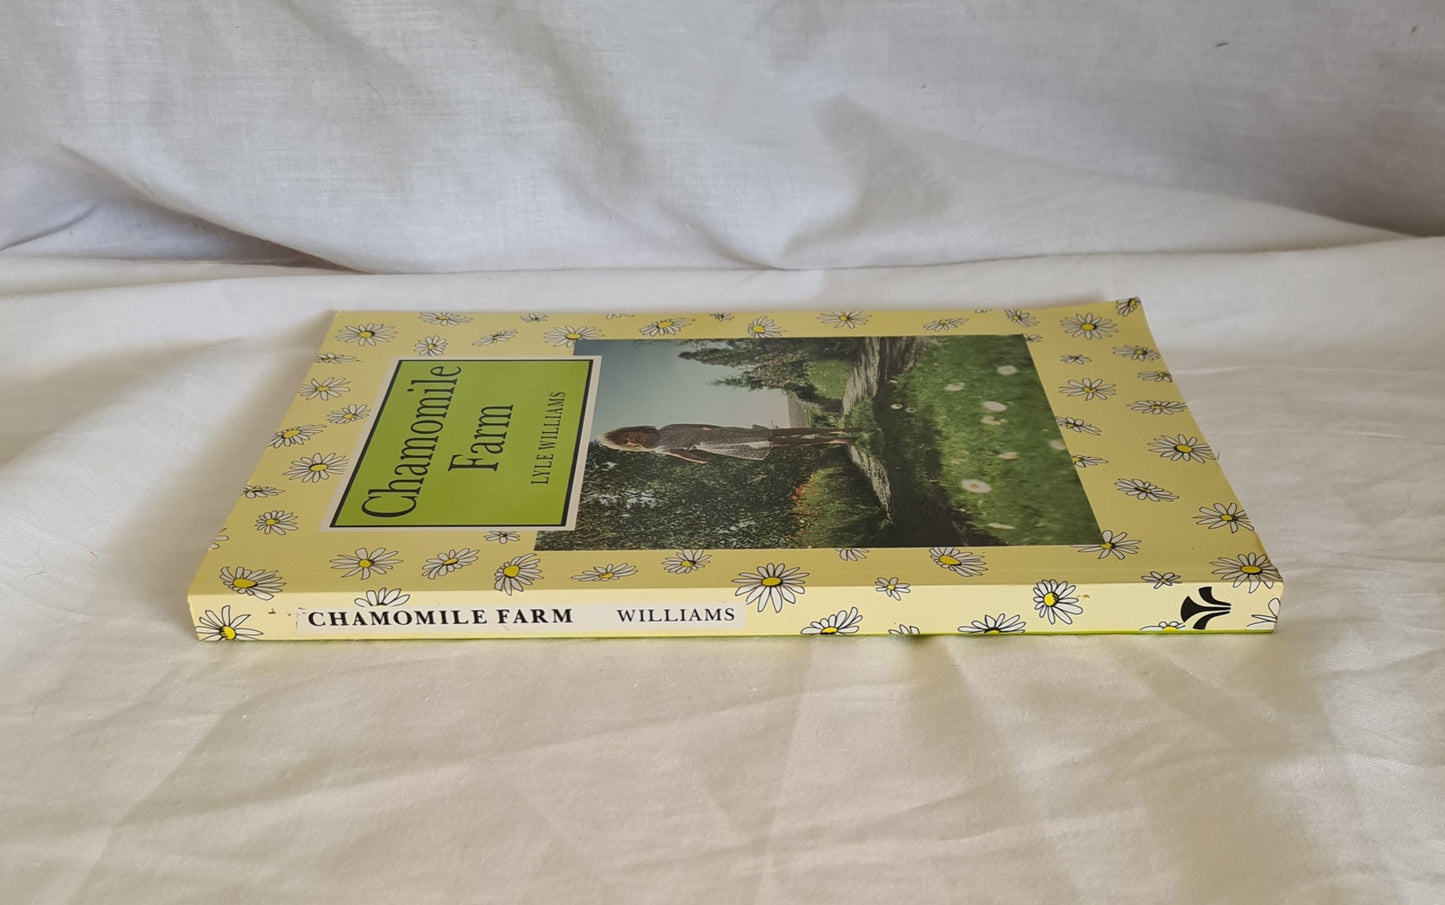 Chamomile Farm by Lyle Williams